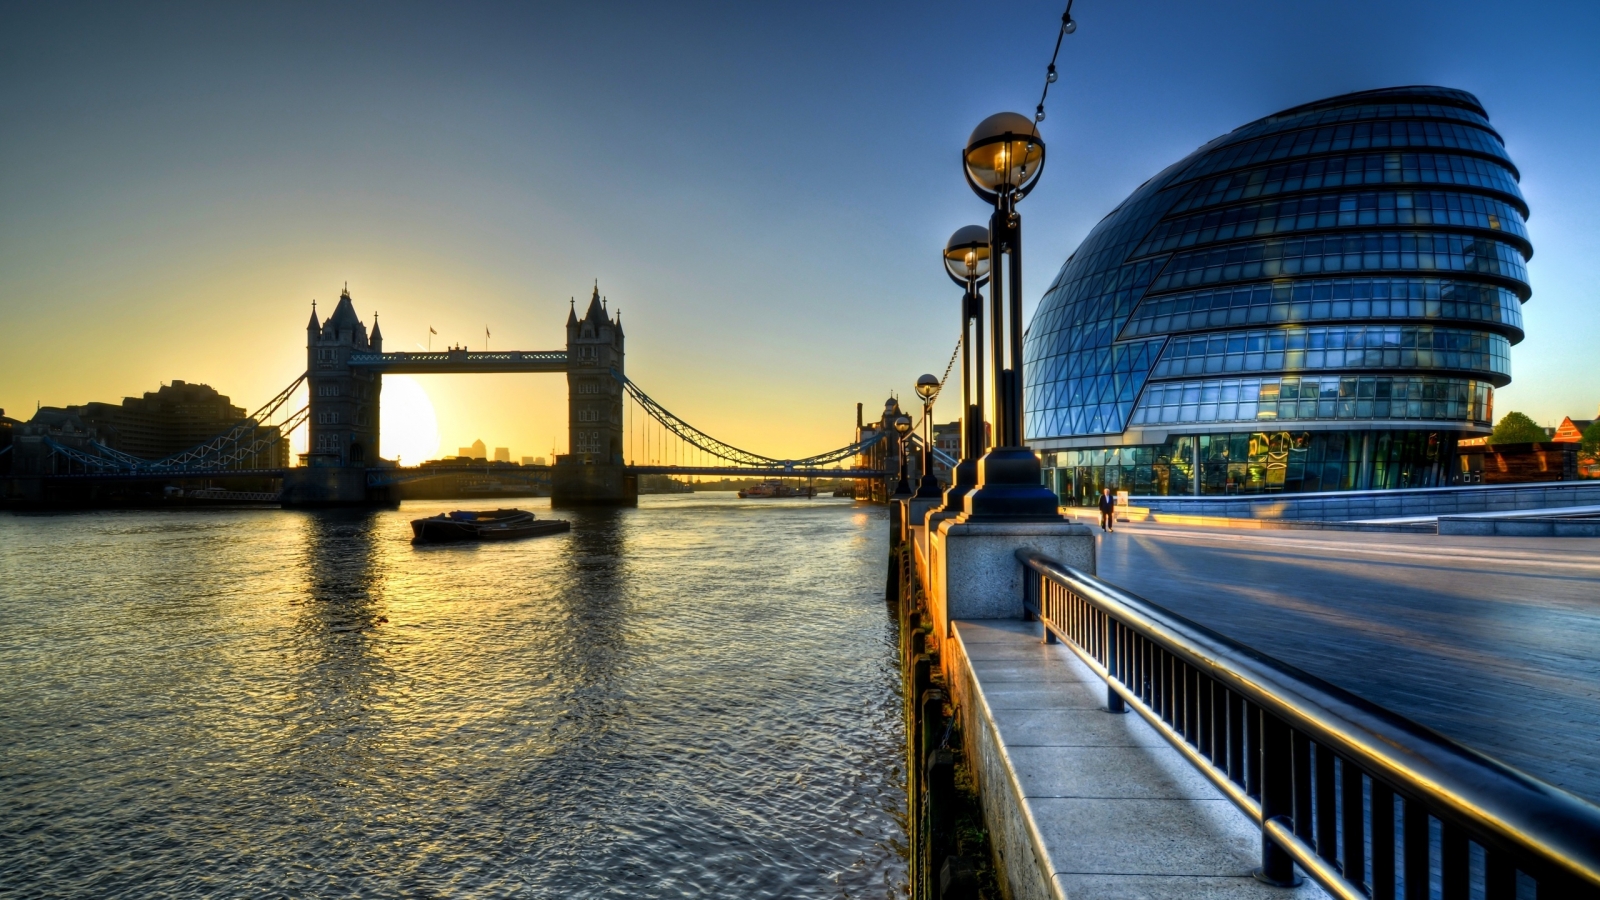 HDR London Tower Bridge for 1600 x 900 HDTV resolution